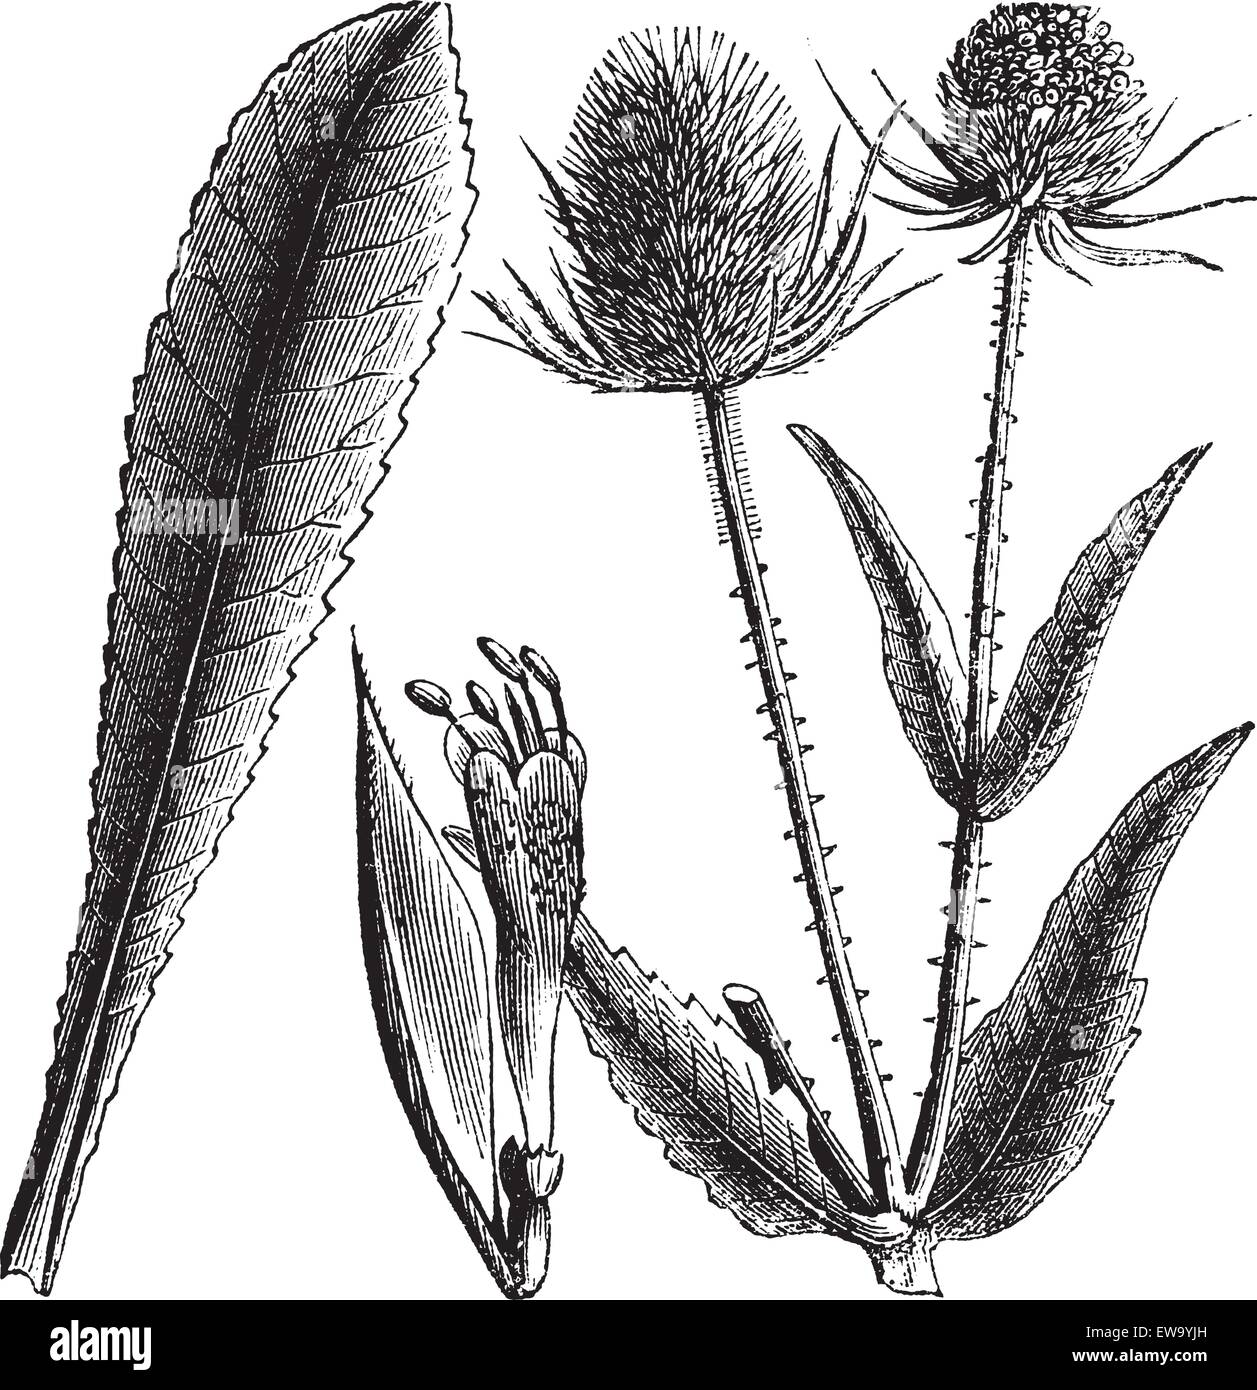 Dipsacus sylvestris or Teasel or Dipsacus fullonum vintage engraving. Old engraved illustrationg of wild teasel. Stock Vector